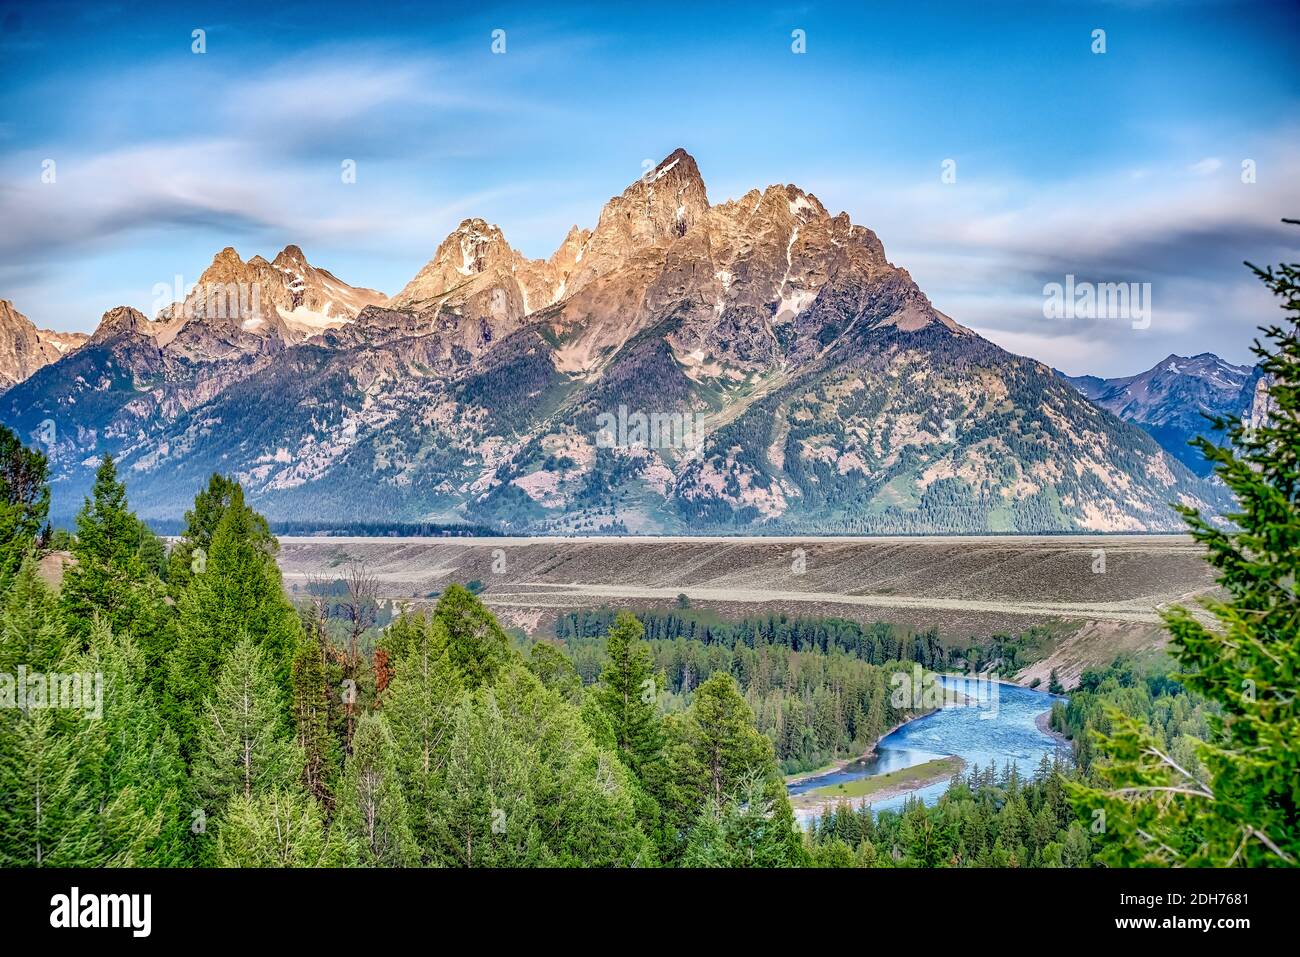 Grand Teton mountains scenic view with Snake river Stock Photo